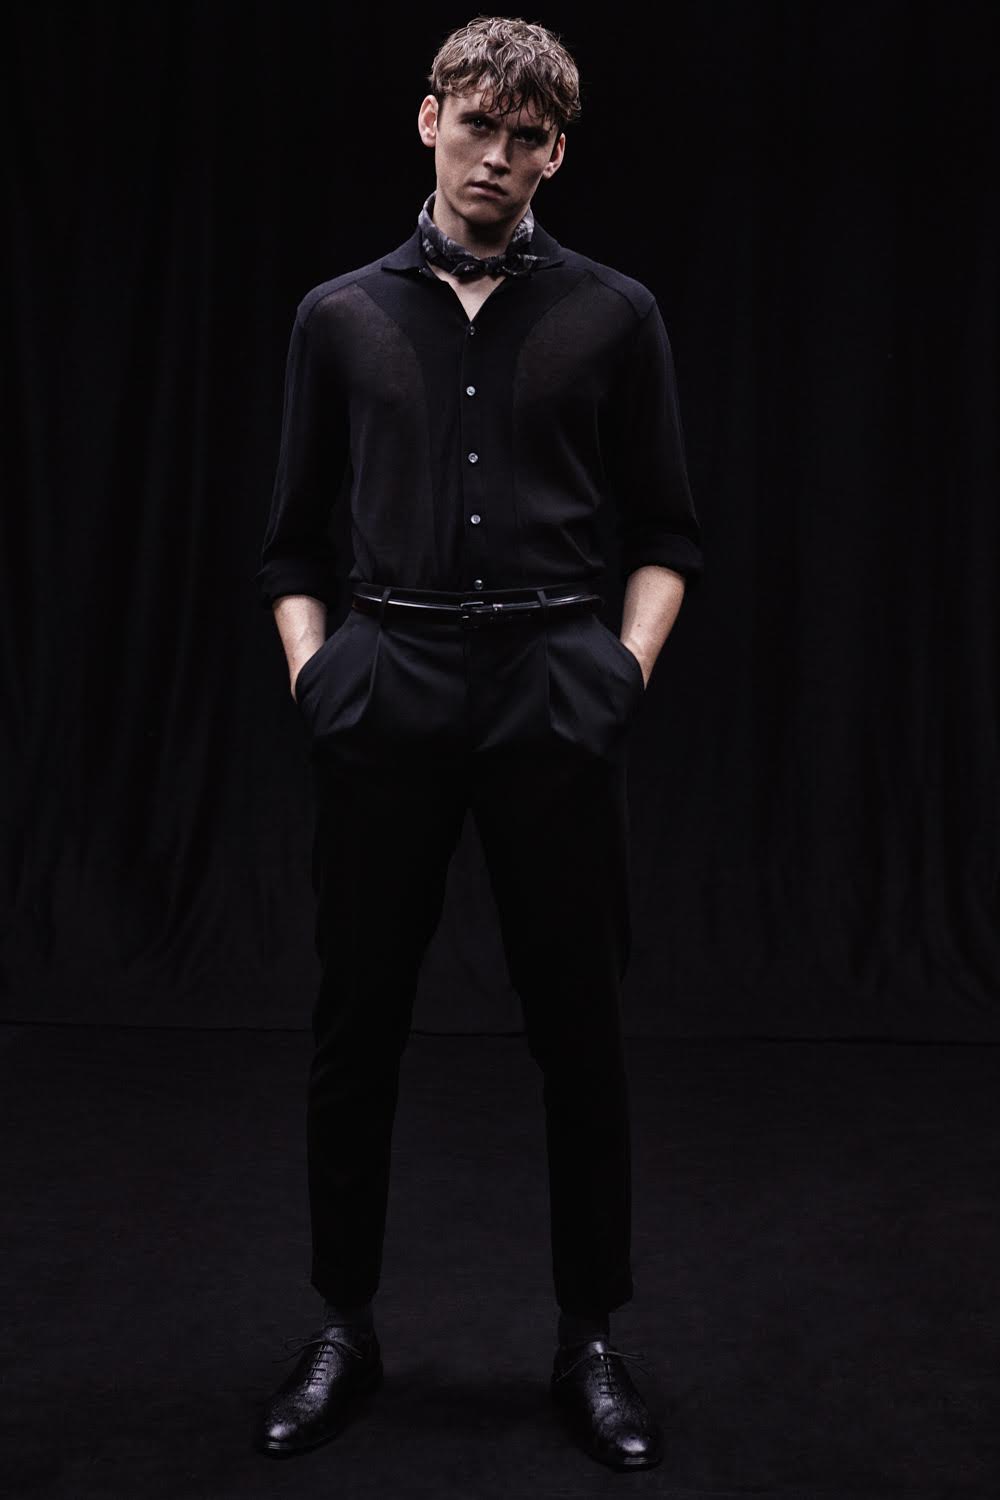 Fade to Black: L’Officiel Hommes España Dresses Up Black | The Fashionisto